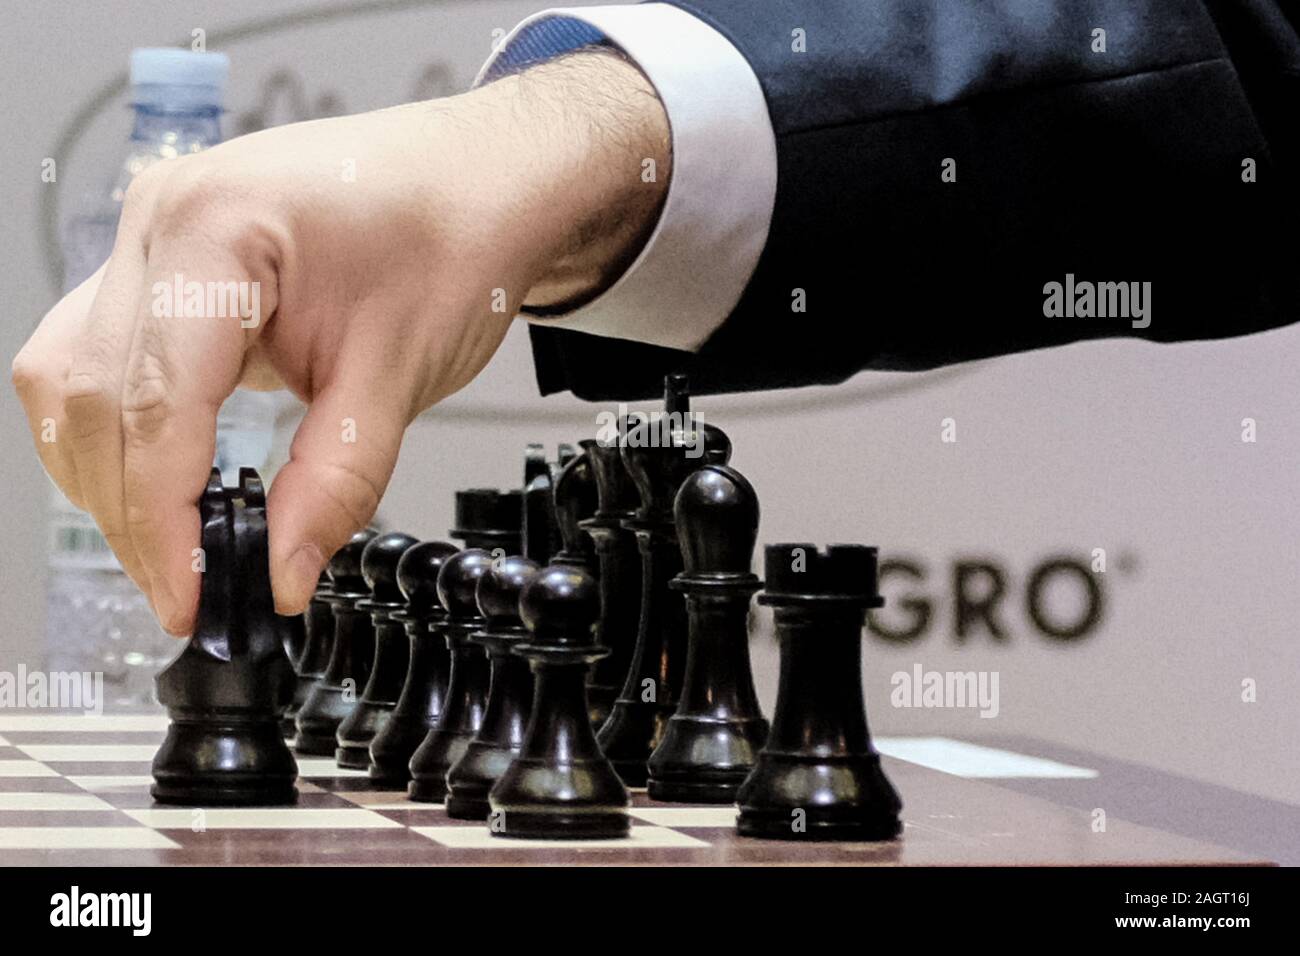 Magnus Carlsen Invitational: Nepomniachtchi knocks out Carlsen